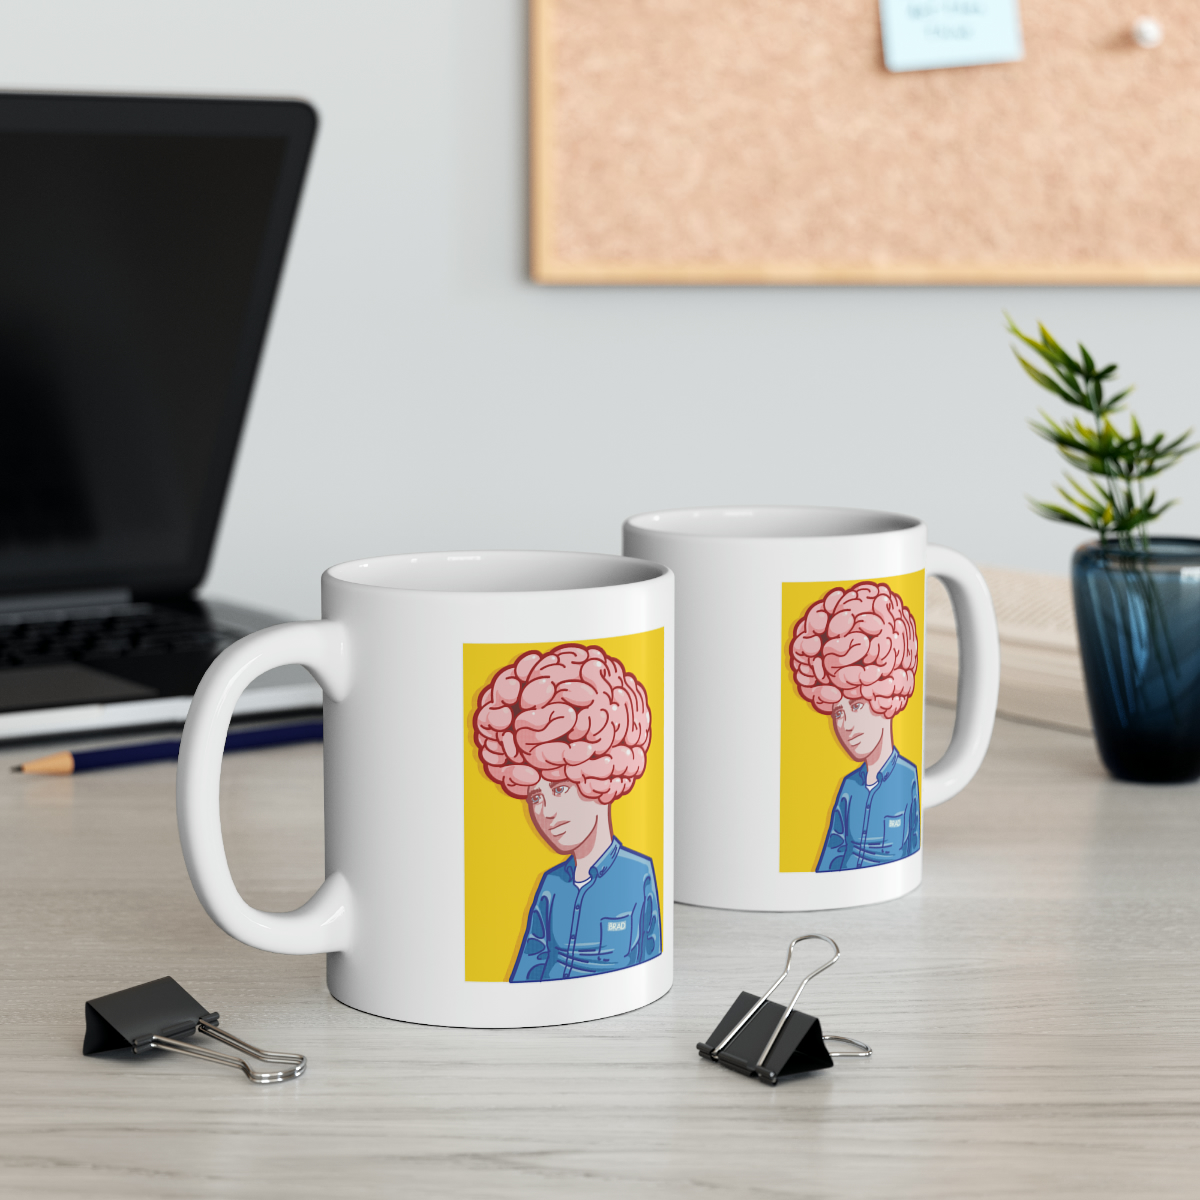 Big Brain - Ceramic Mug, 11oz